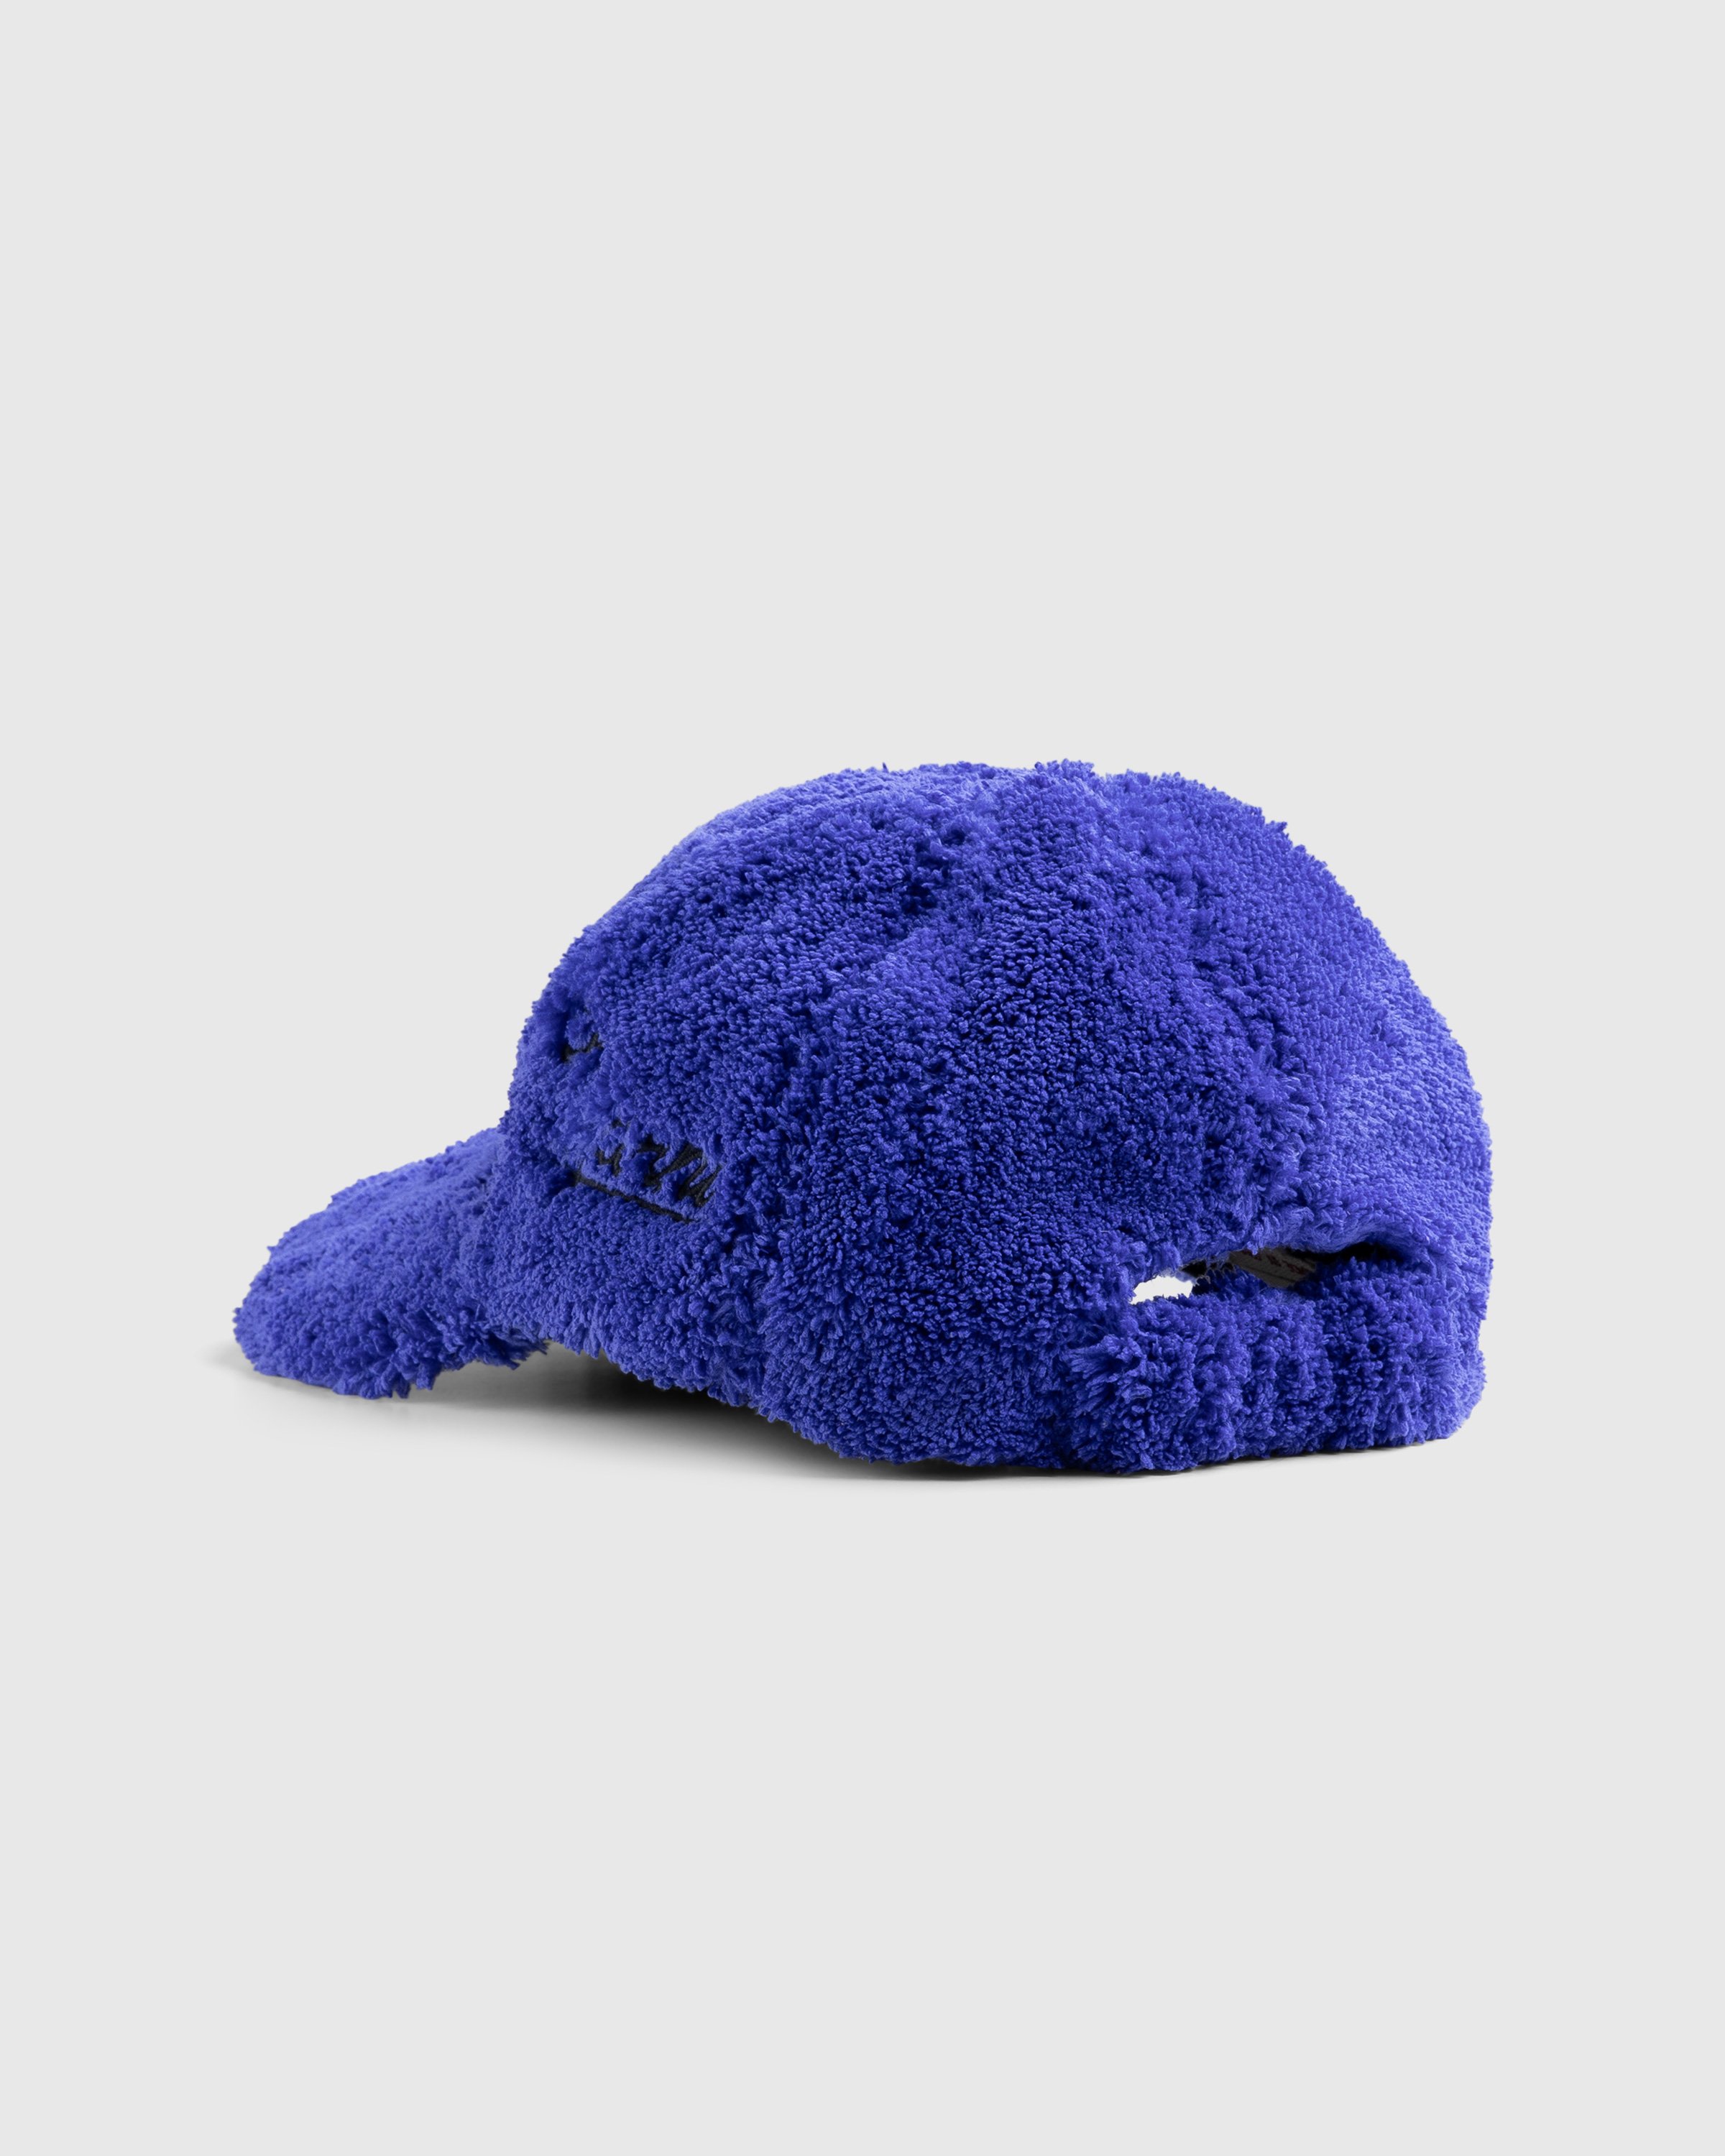 Marni - Fuzzy Faux Fur Baseball Hat Blue - Accessories - Blue - Image 3